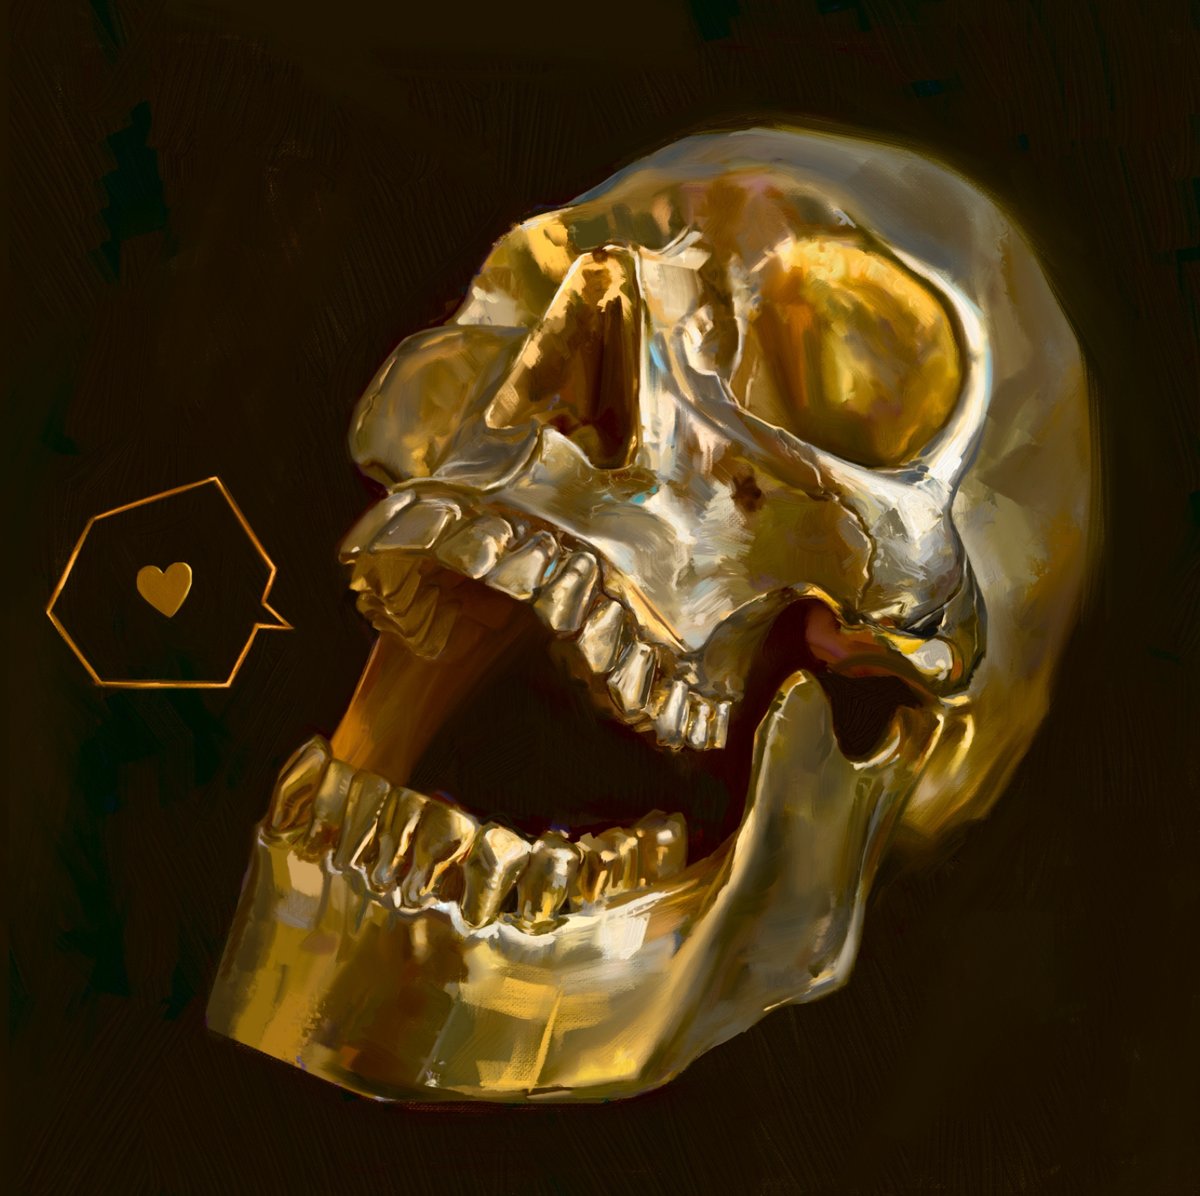 I like painting gold skulls. My teenage self would be proud.